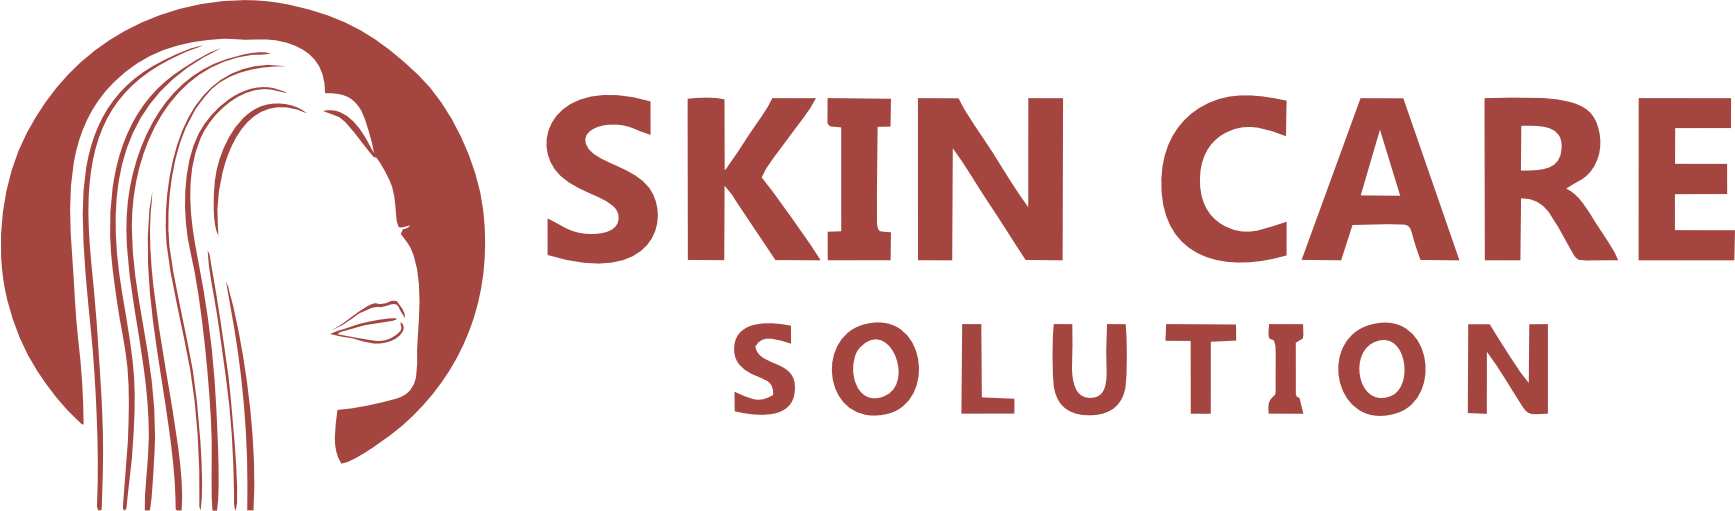 Skin Care Solution